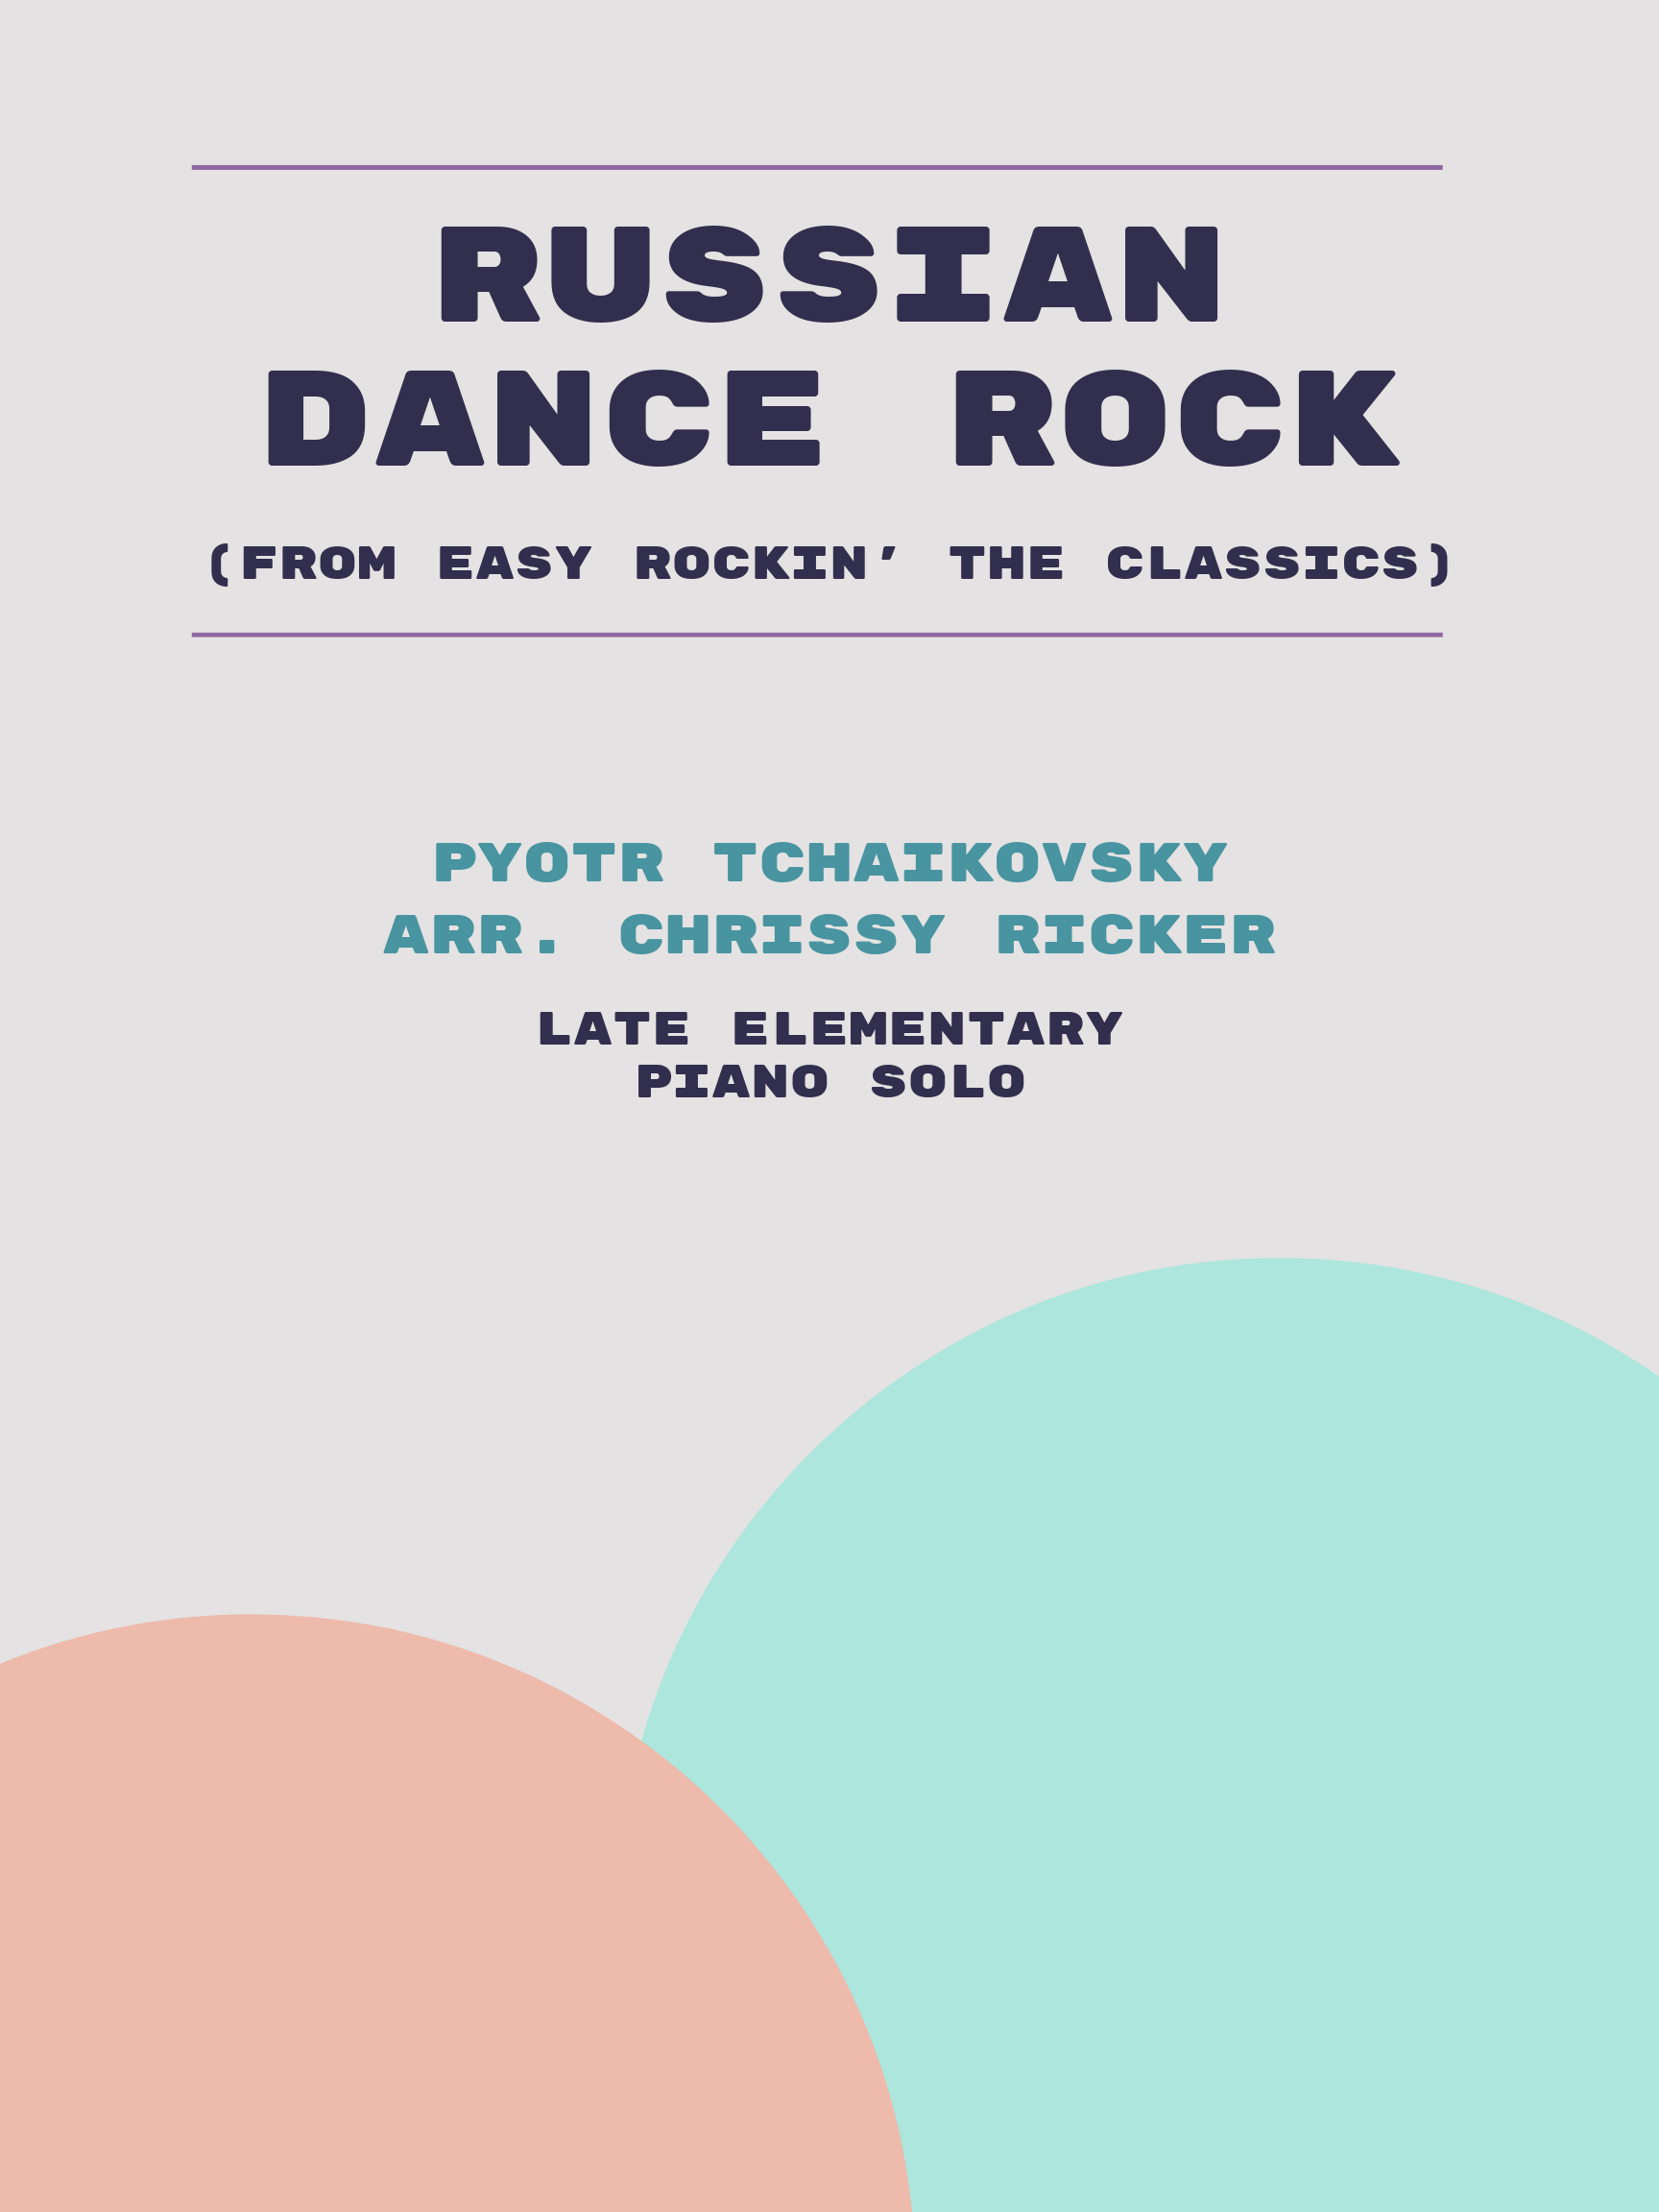 Russian Dance Rock by Pyotr Tchaikovsky